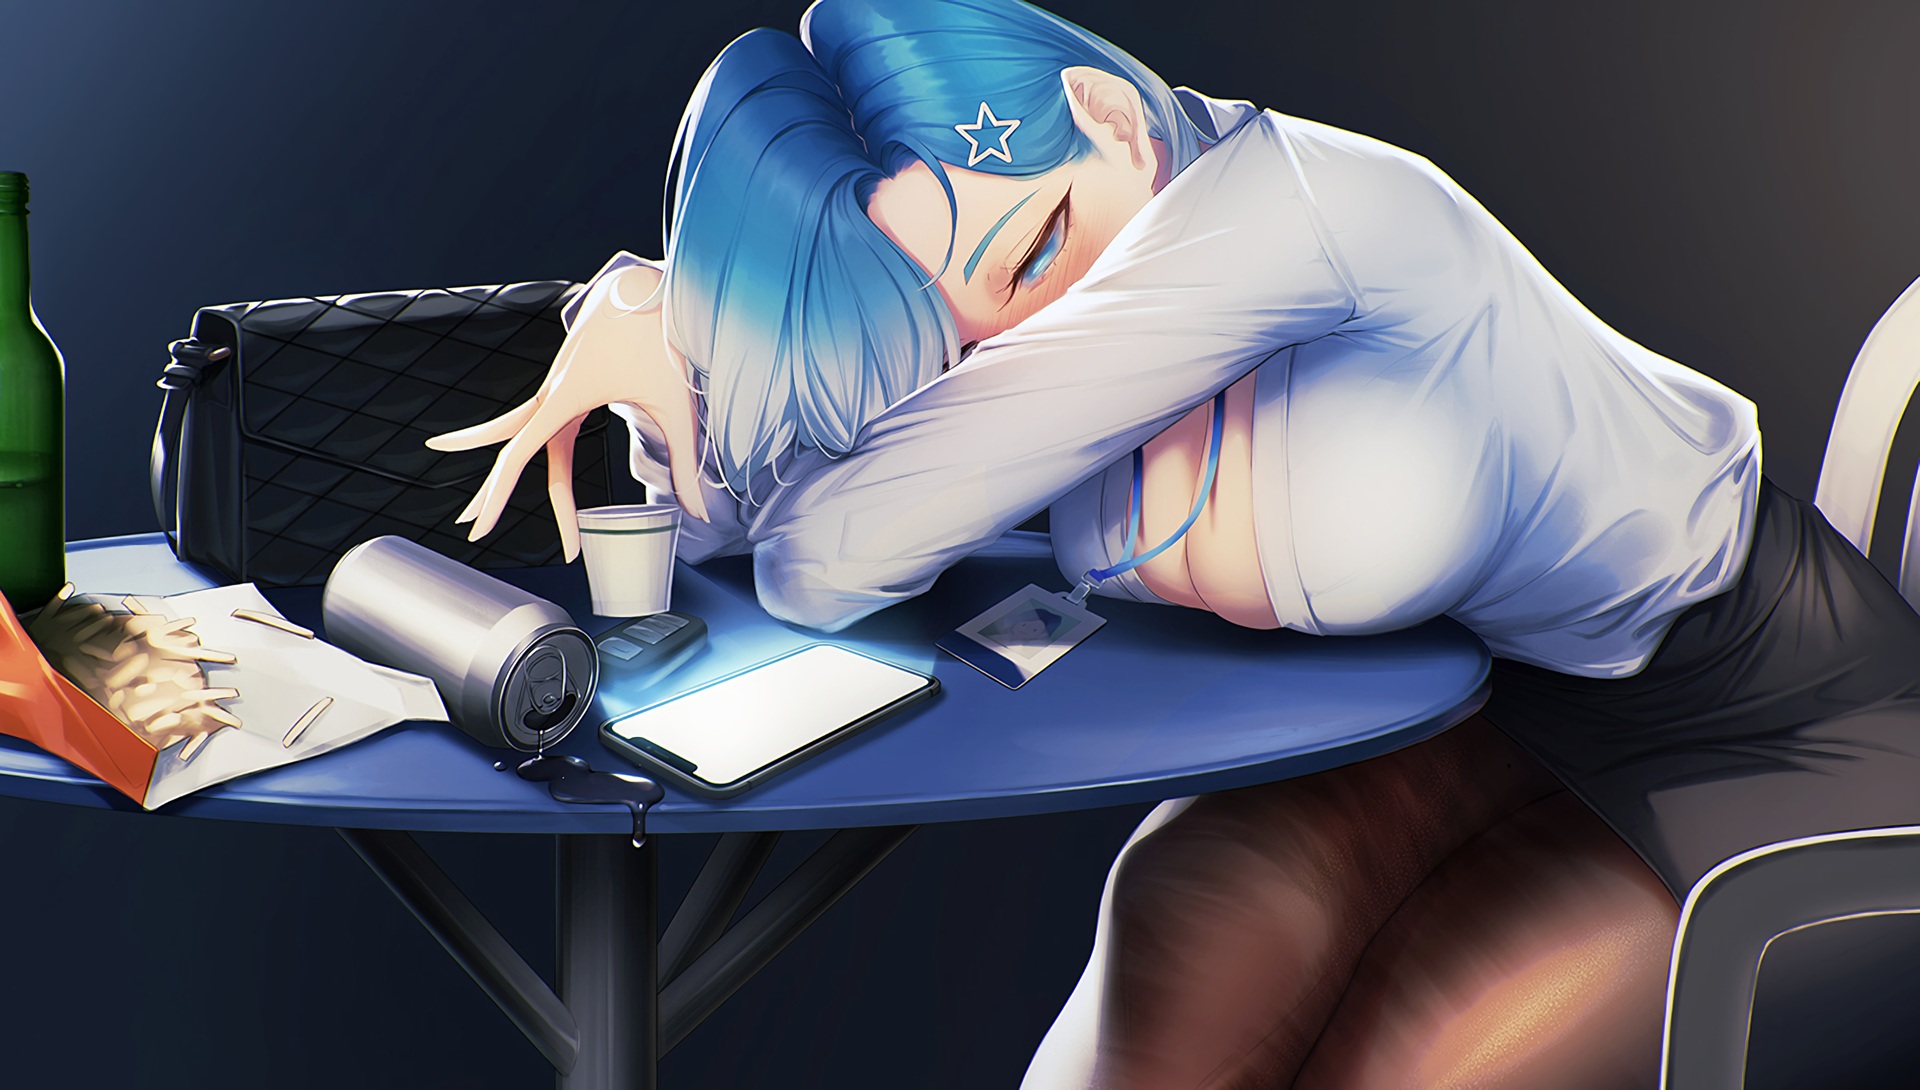 Anime 1920x1090 aqua eyes blue hair big boobs black skirts work tired smartphone table looking below